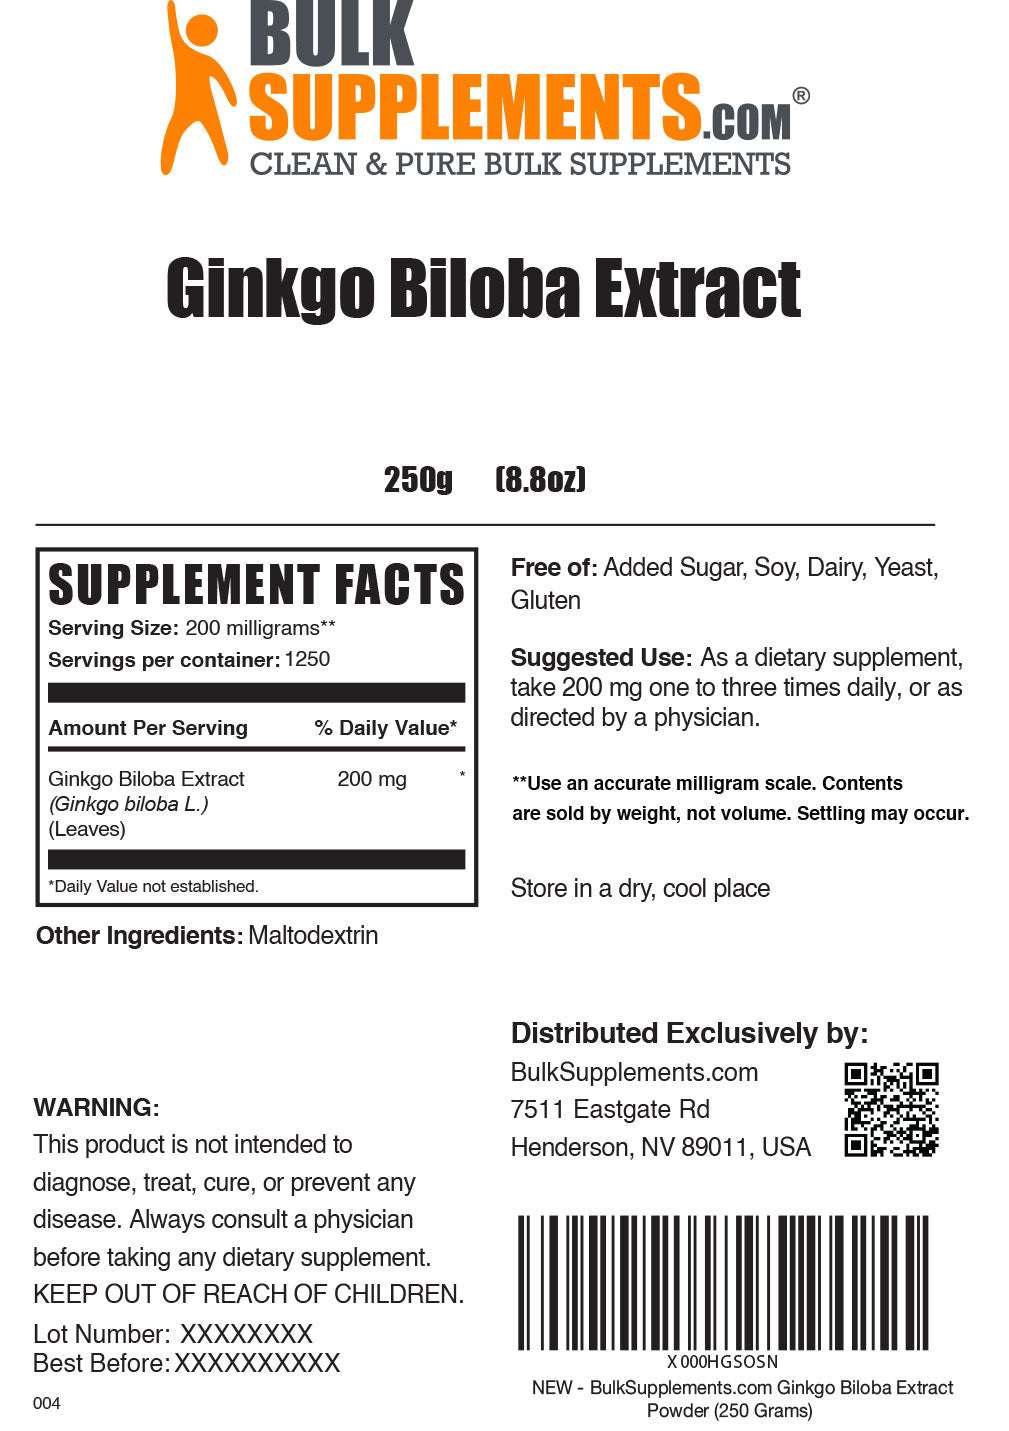 Ginkgo Biloba Extract powder label 250g